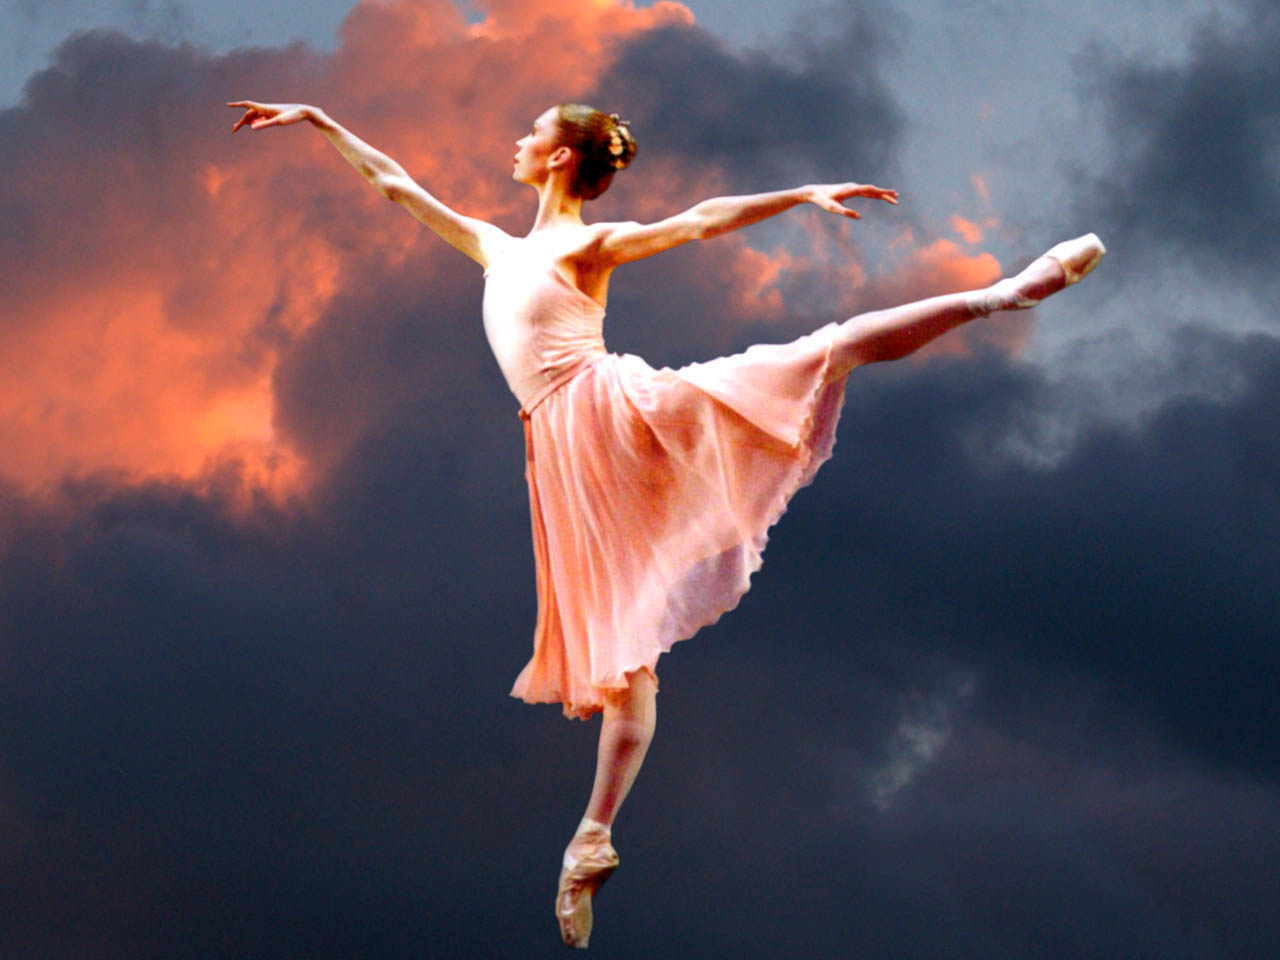 Ballerina Background Images  Free Download on Freepik